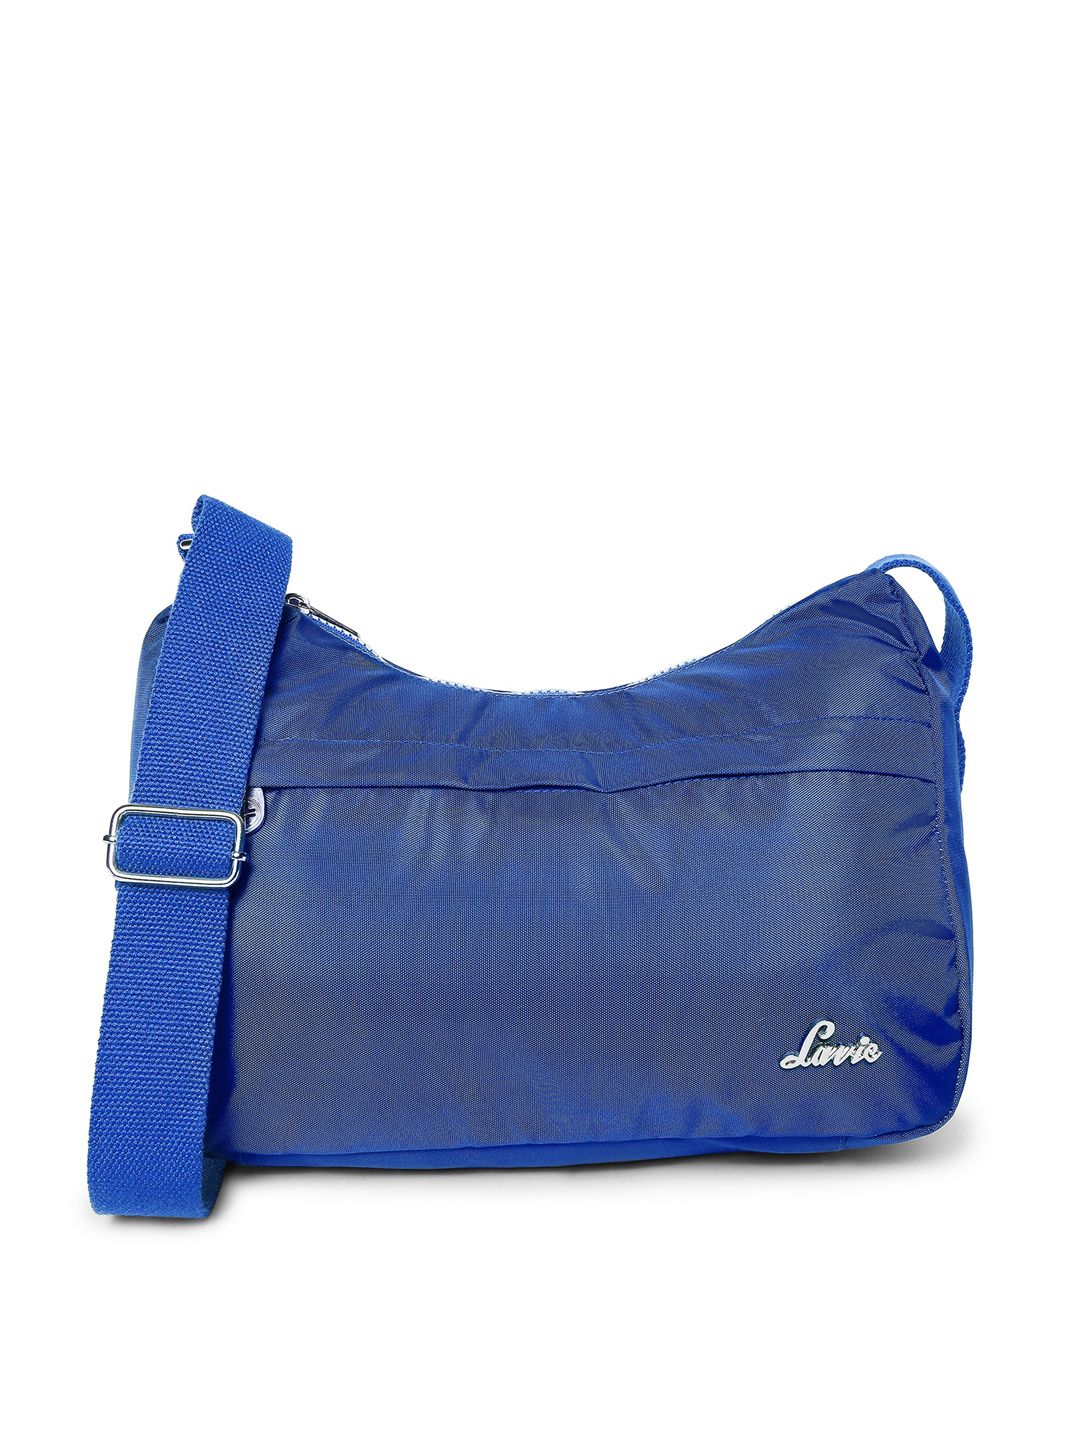 Lavie Blue Solid Shopper Sling Bag Price in India